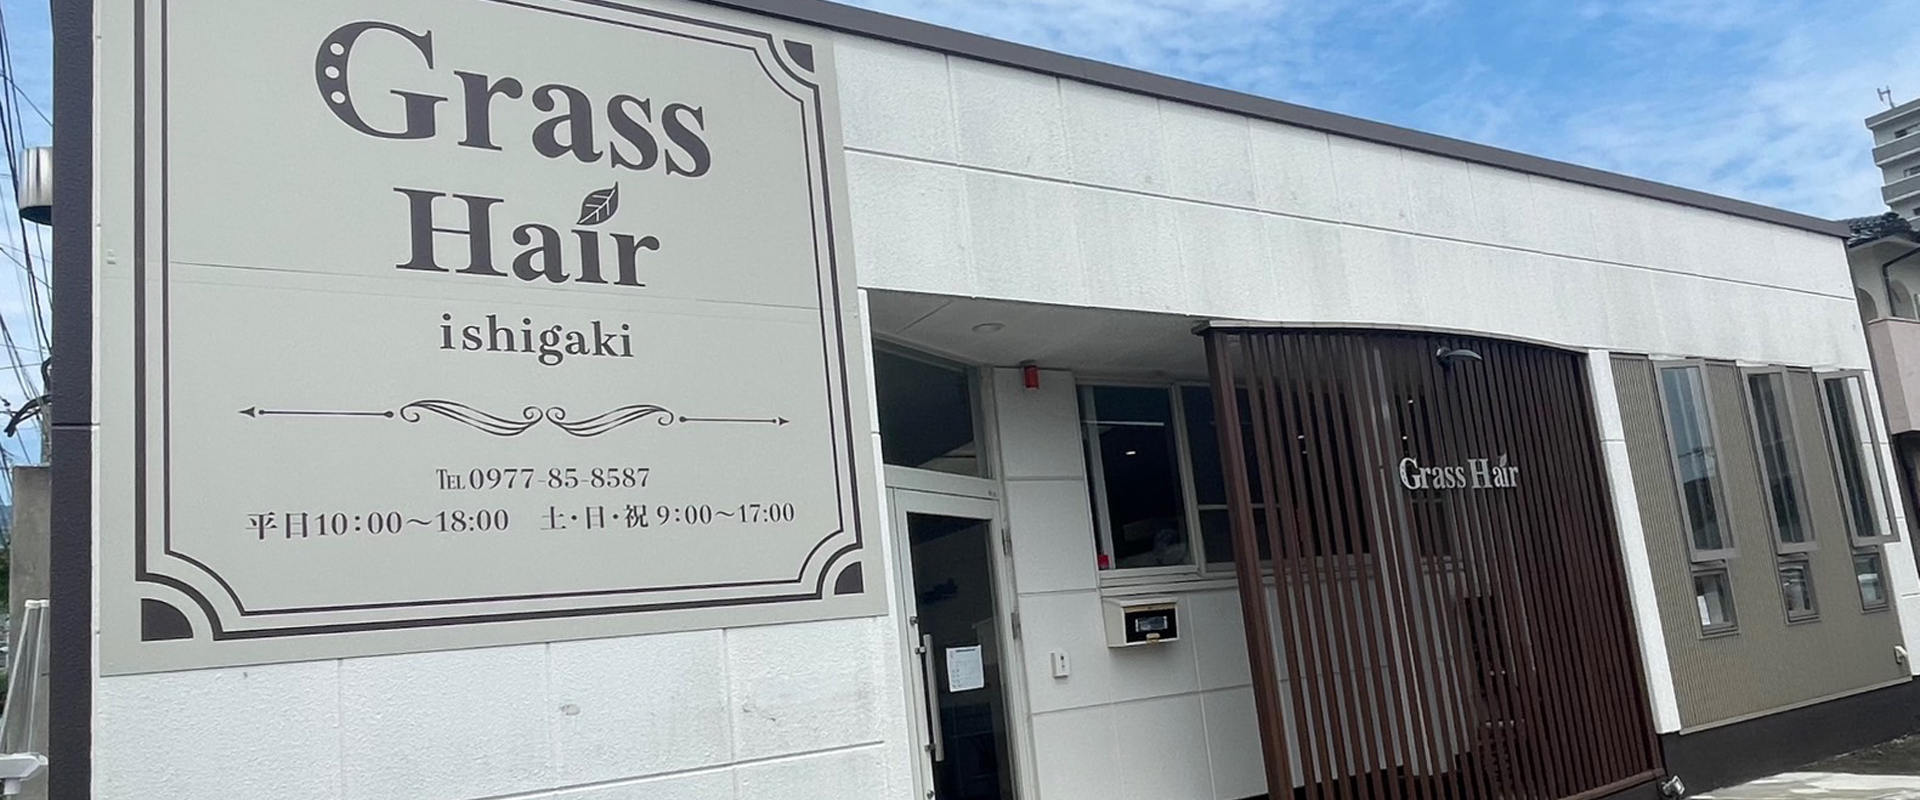 Grass Hair石垣店